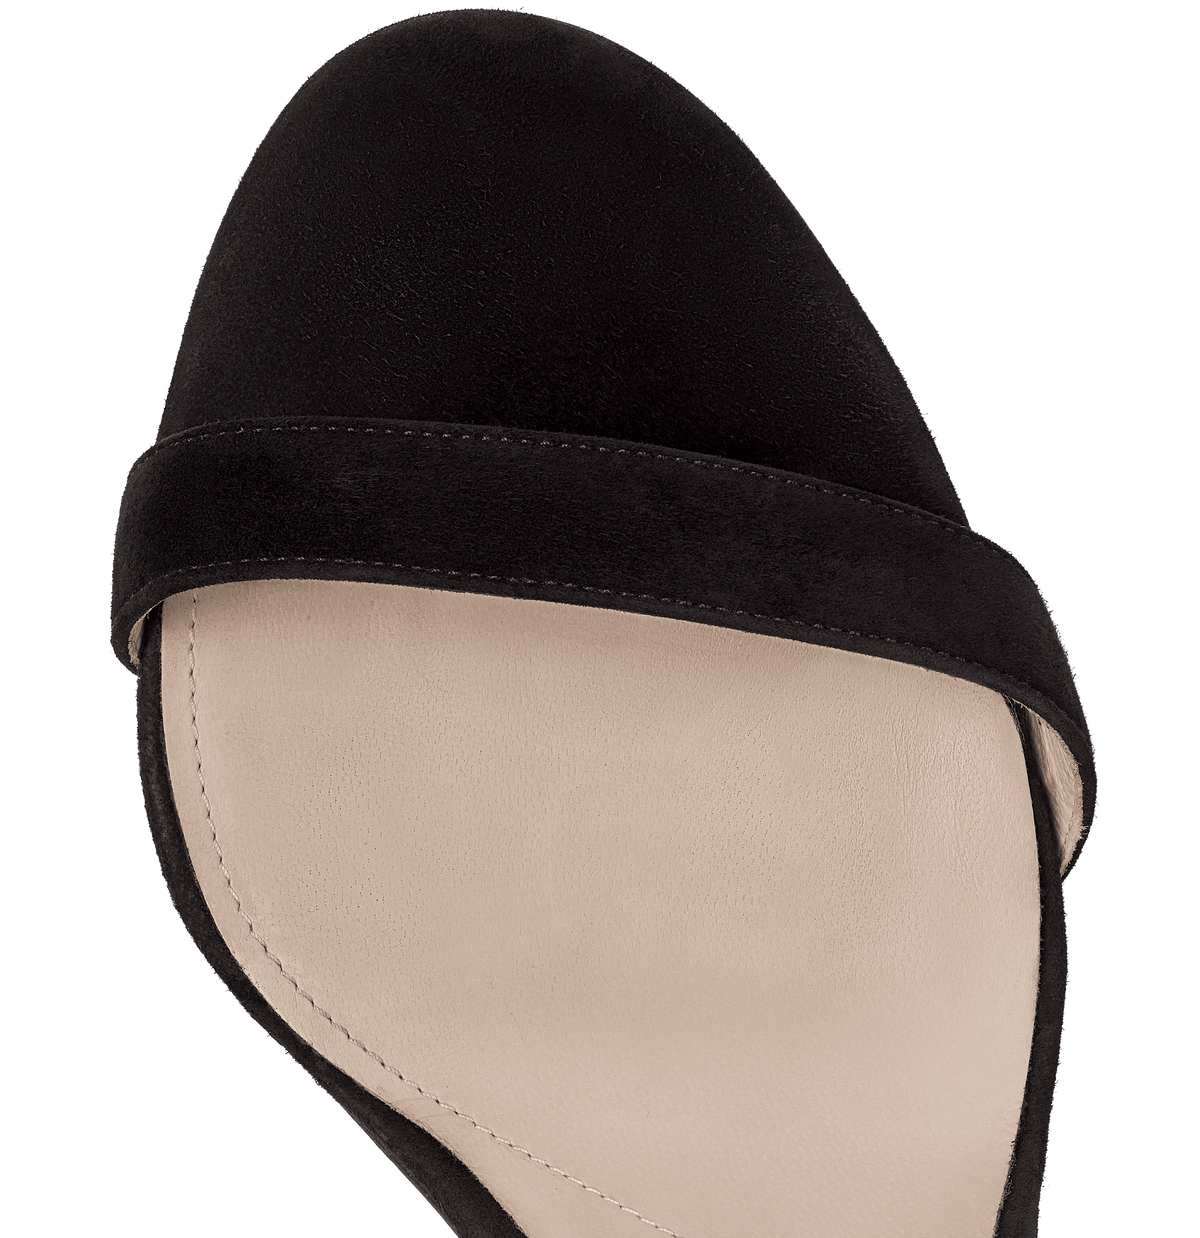 Black Suede Strap Sandals